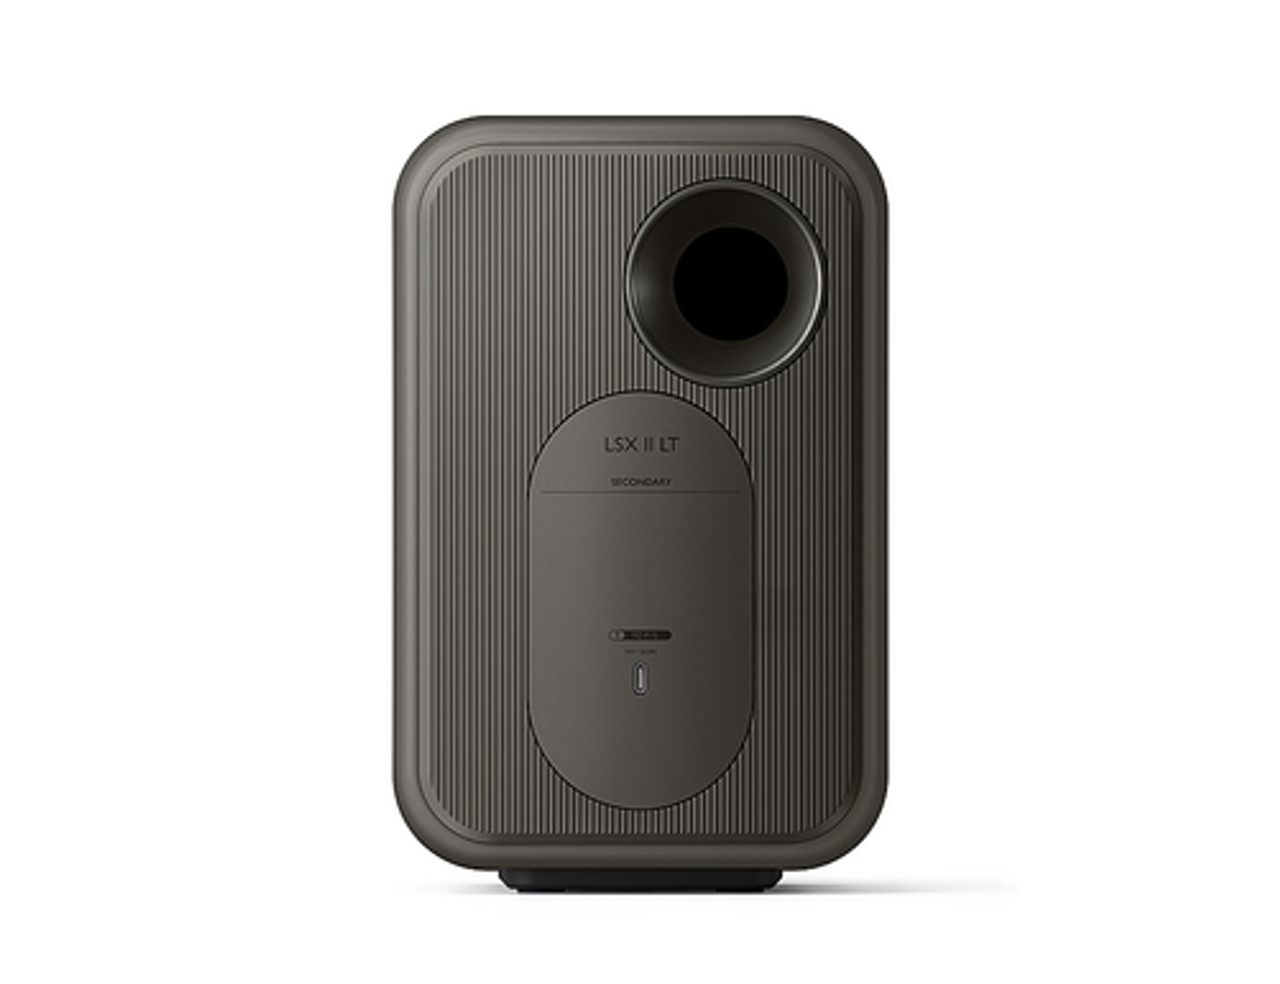 KEF - LSXII LT Wireless Speakers - Graphite Grey